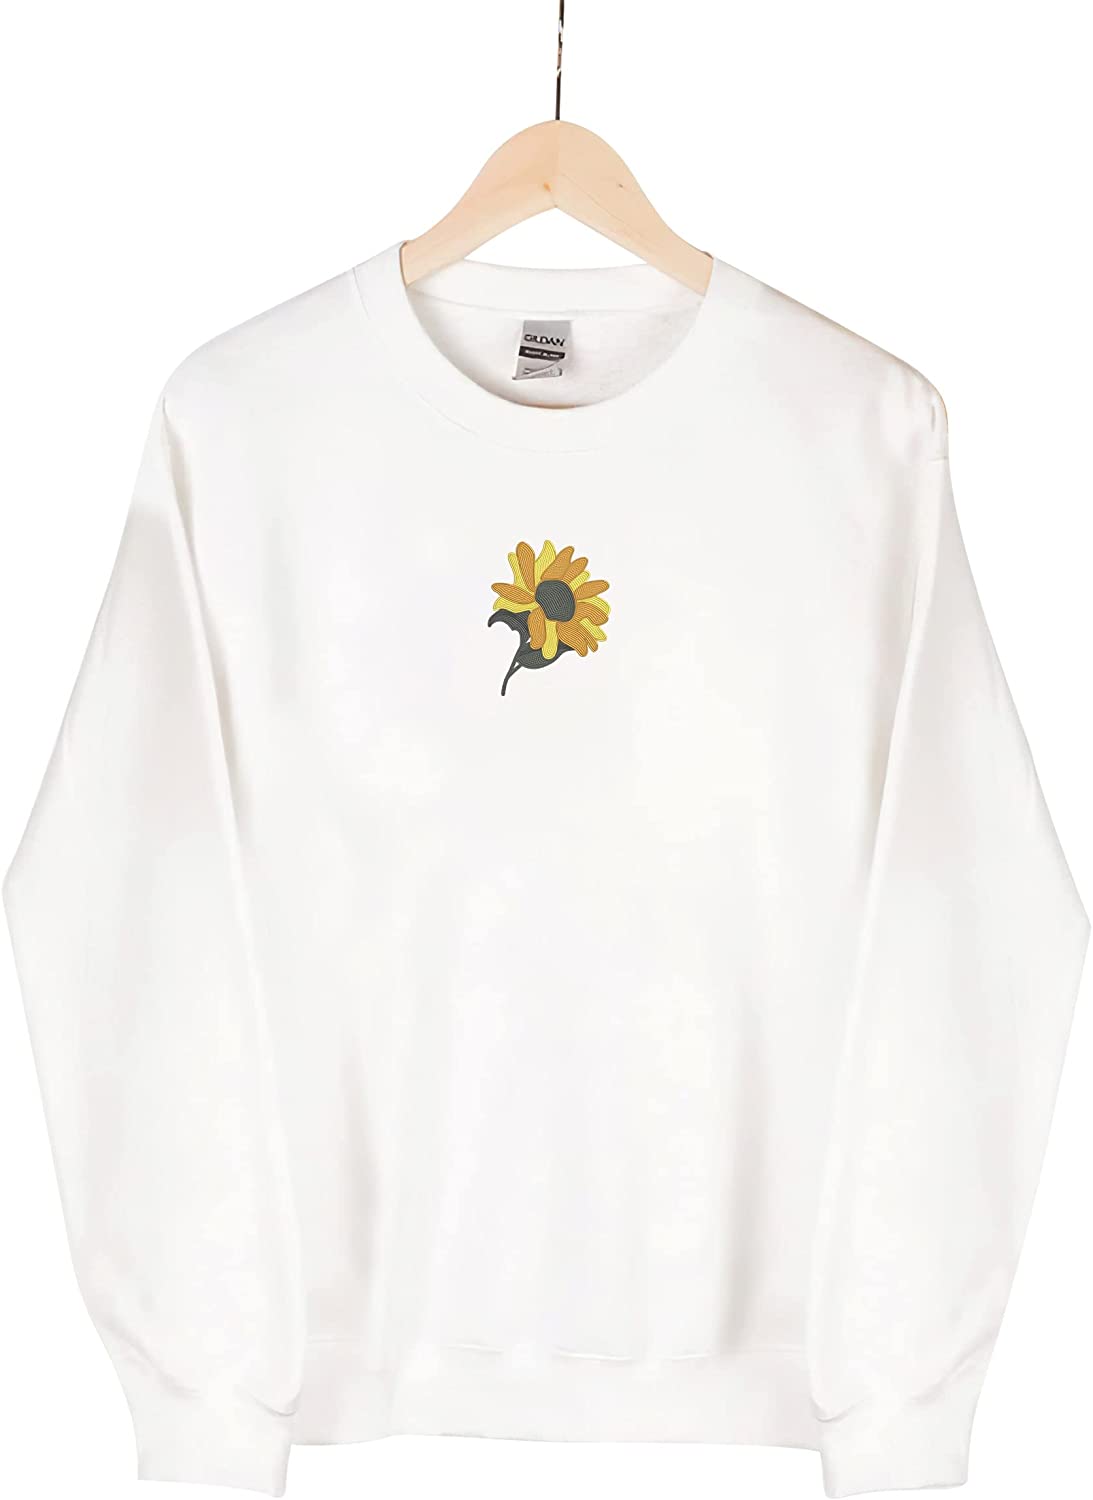 San Francisco Embroidered Unisex Crewneck Sweatshirt Shirt - Teeholly